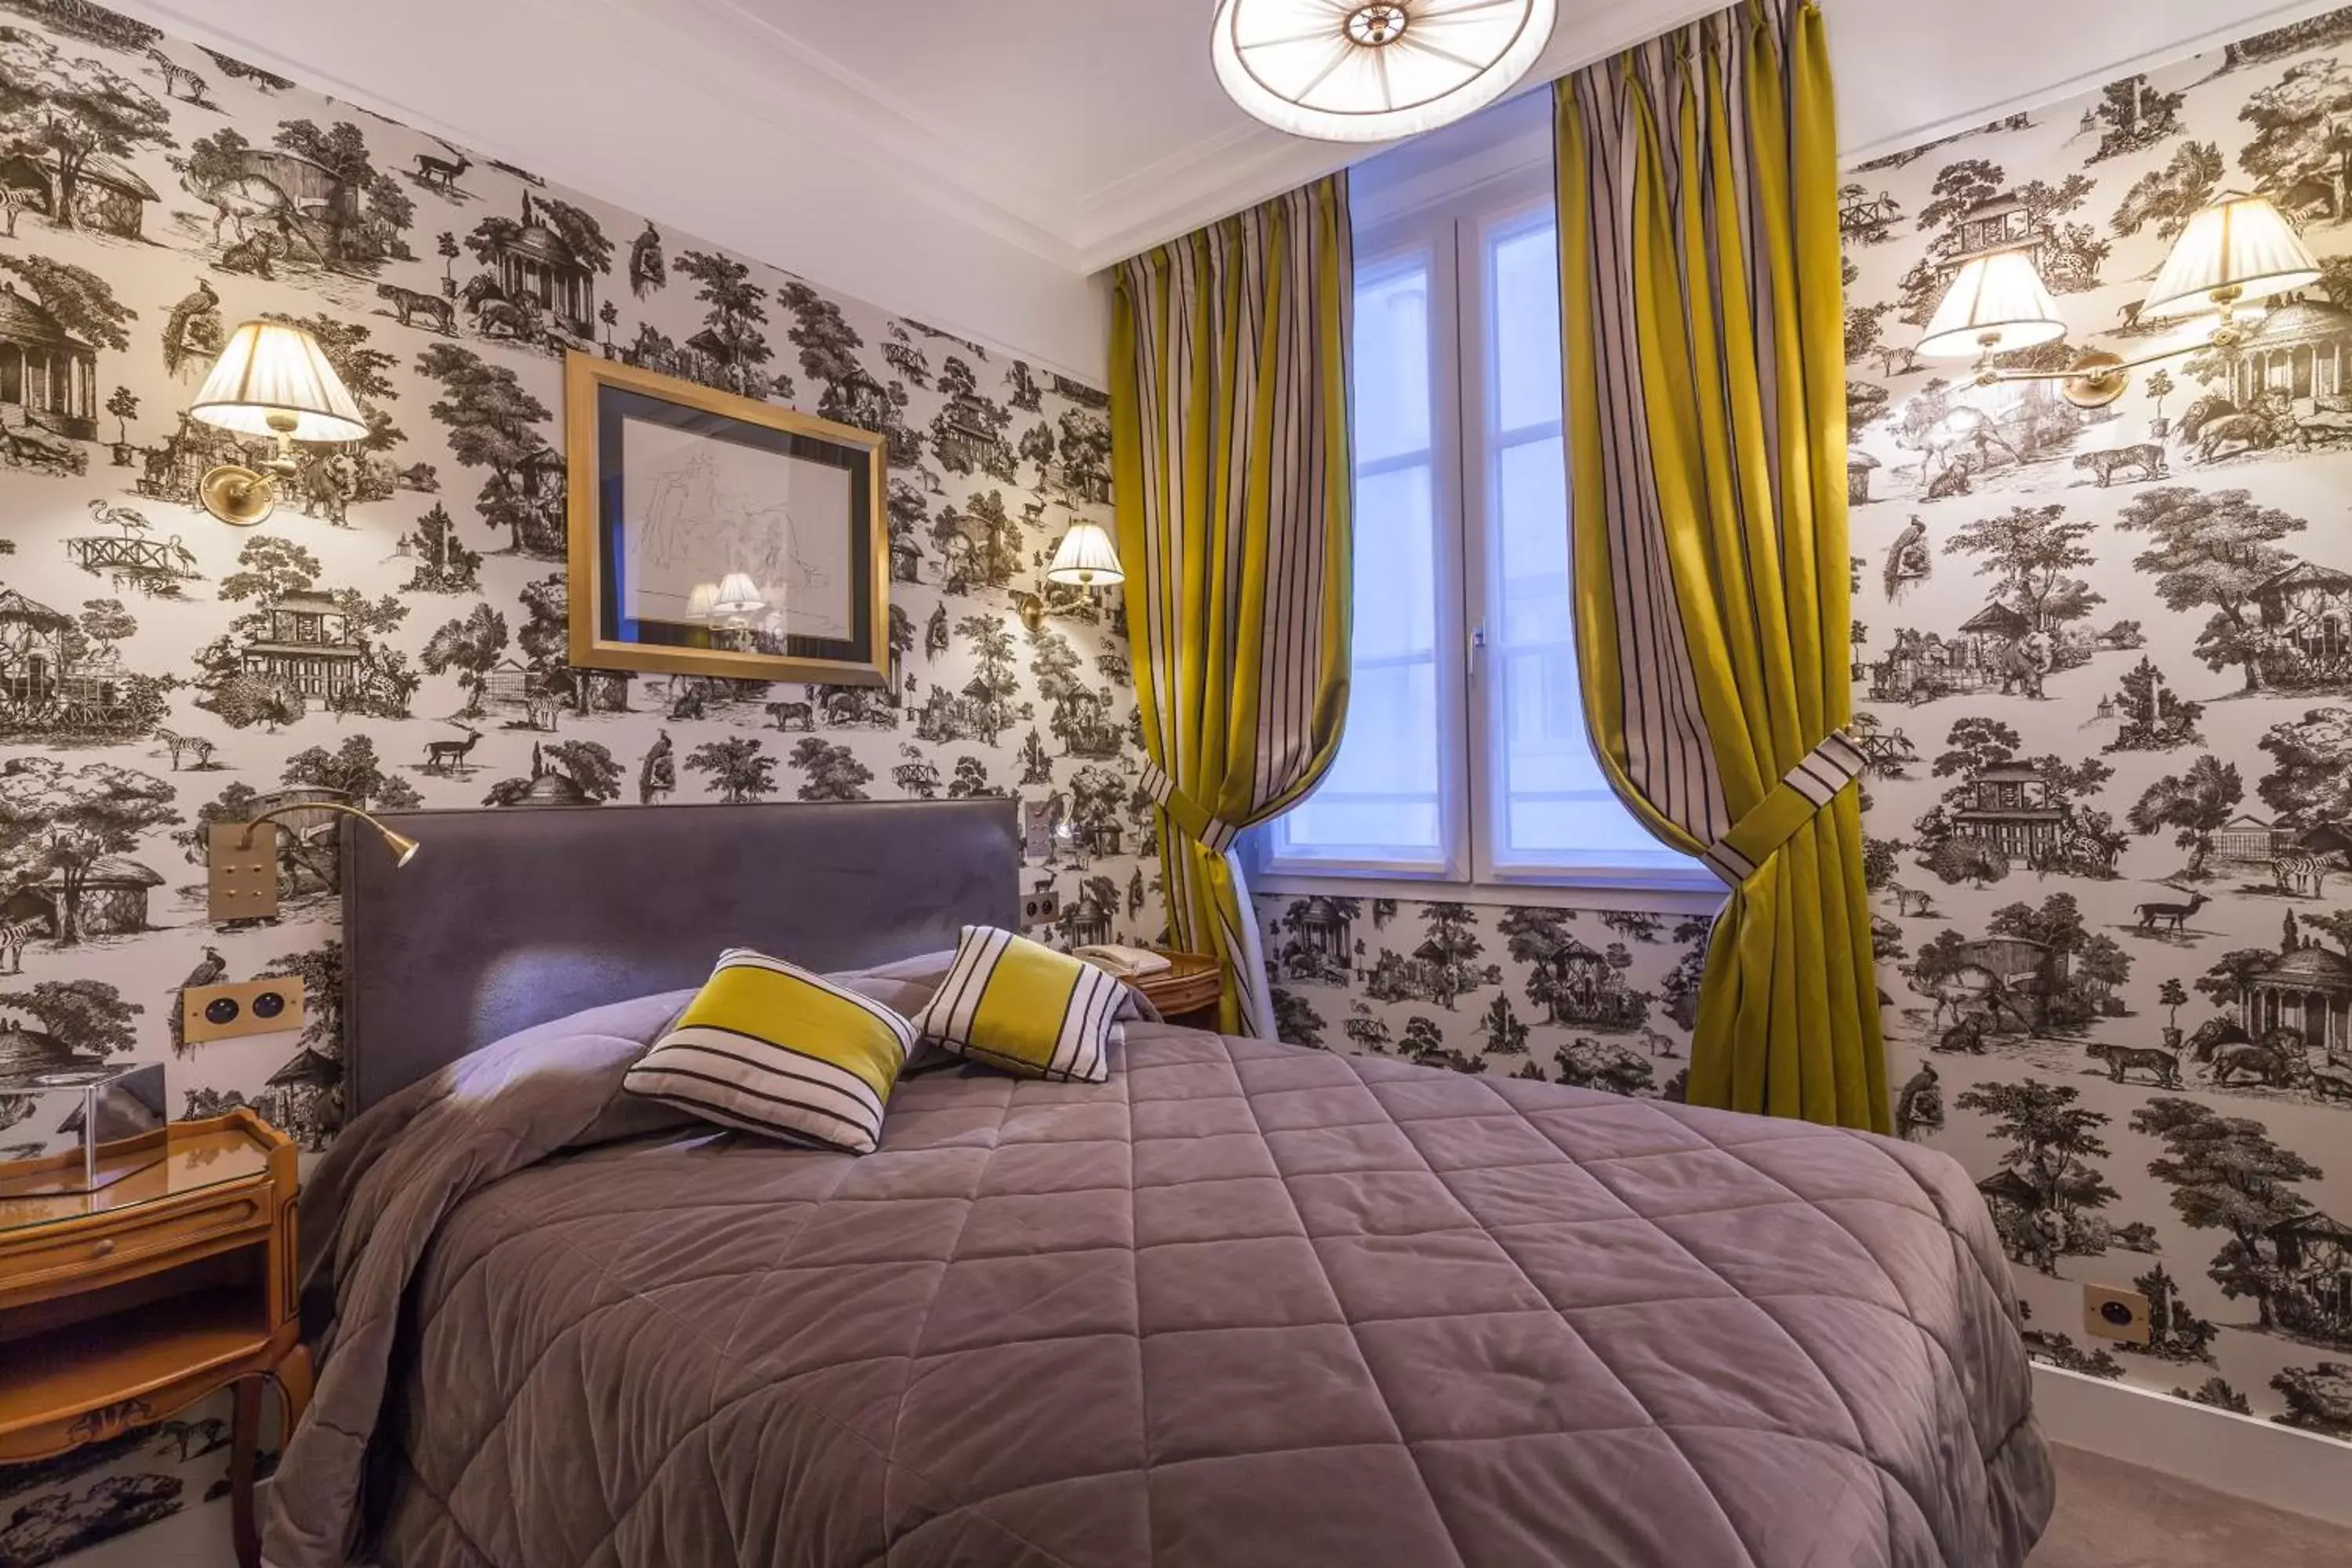 Bed, Room Photo in Grand Hôtel de L'Univers Saint-Germain